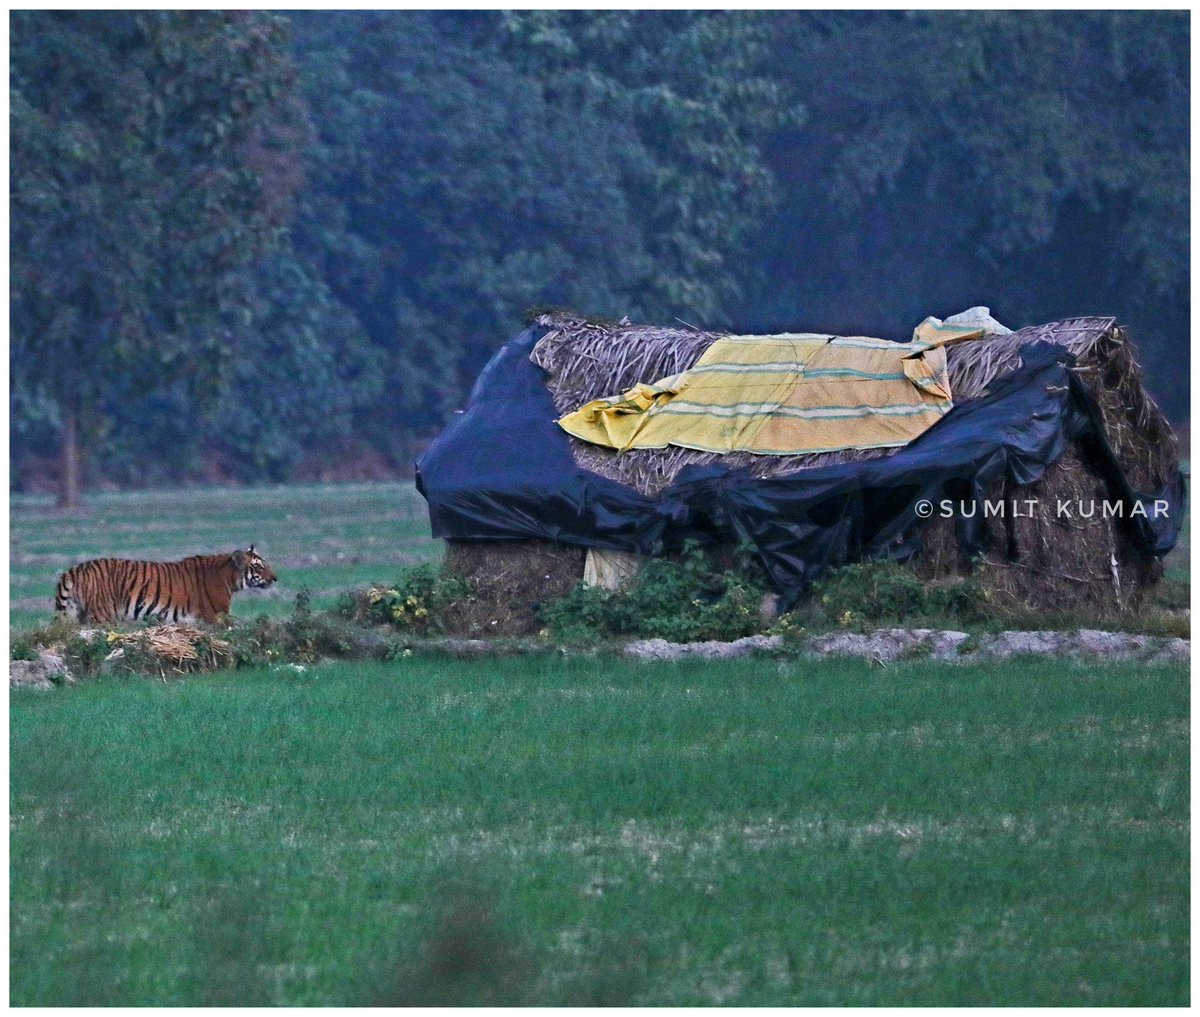 ये पीलीभीत है

#canon5dmarkiv #canon #Tiger #indiaphotoproject #canonphotography #canonindia #photojournalism #wildlife #wildlifeplanet #naturelovers #wildlifeonearth #pilibhit #PilibhitTigerReserve